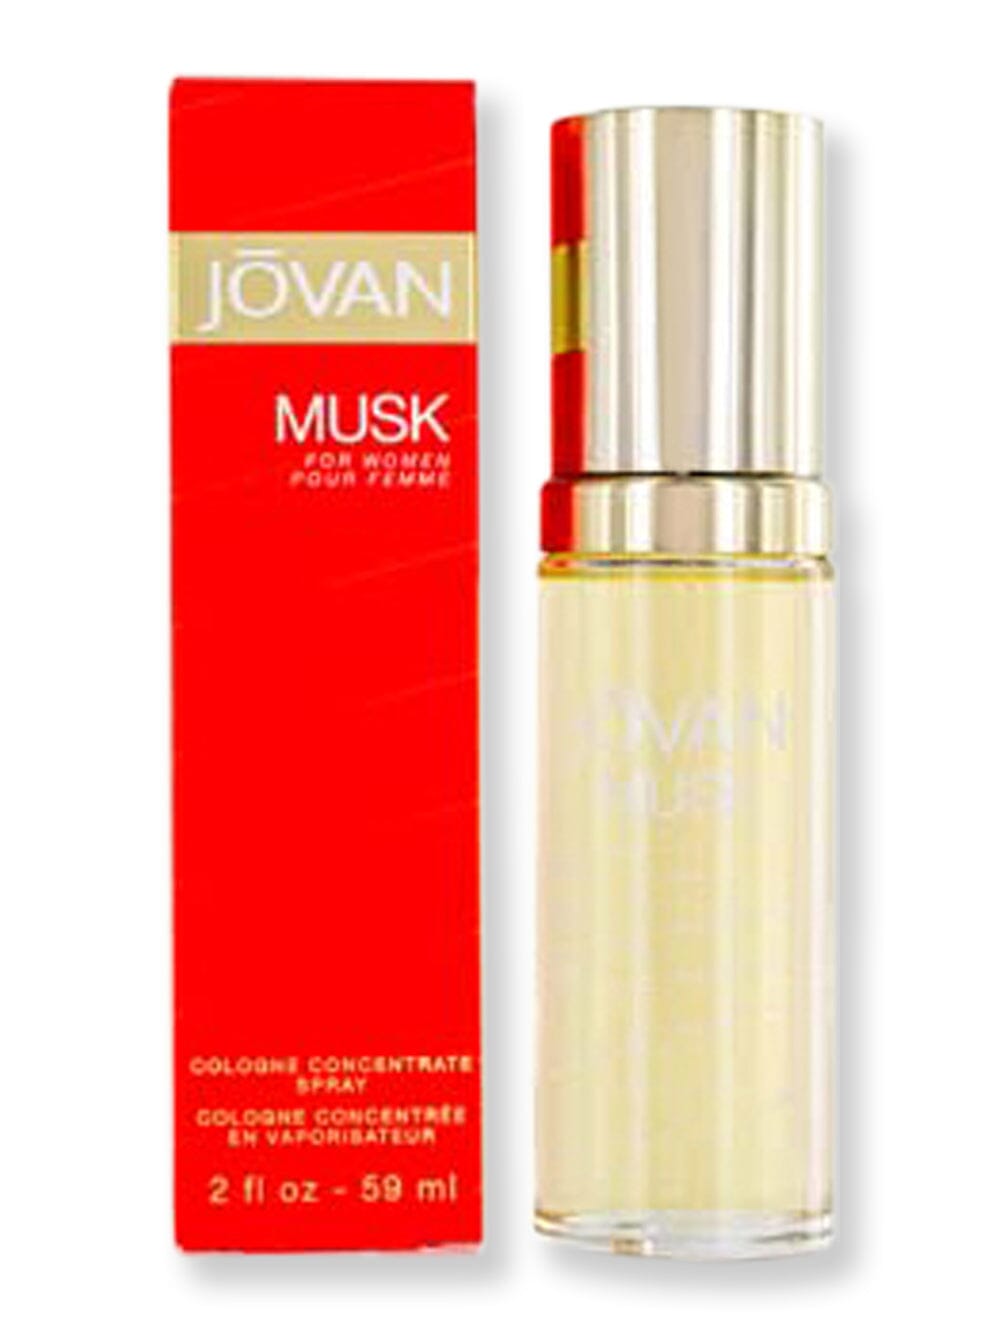 Jovan Jovan Musk Cologne Concentrate Spray 2 oz60 ml Cologne 